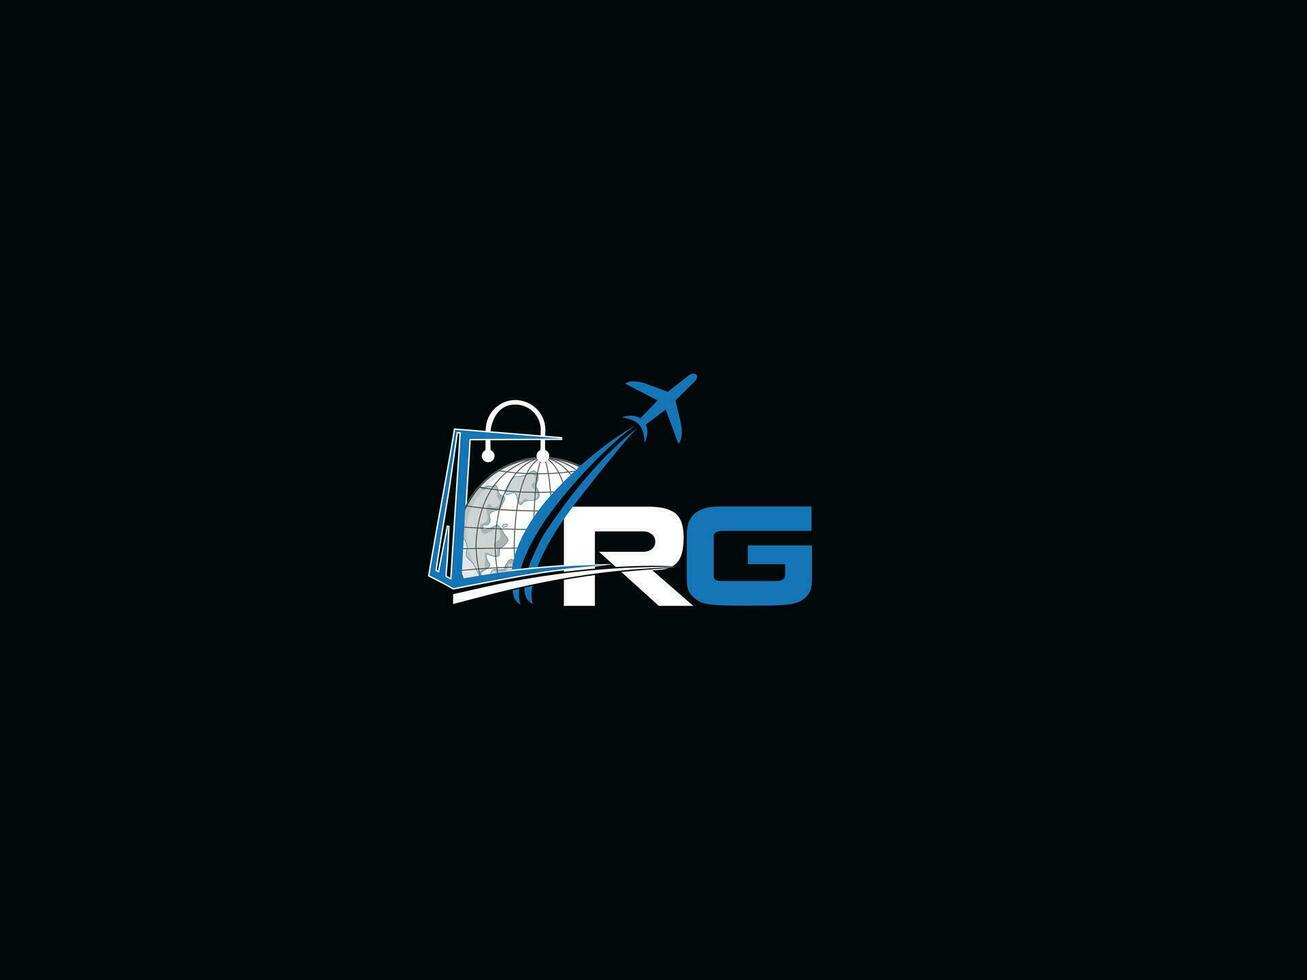 rg initiale Voyage logo, Créatif global rg en voyageant logo lettre vecteur